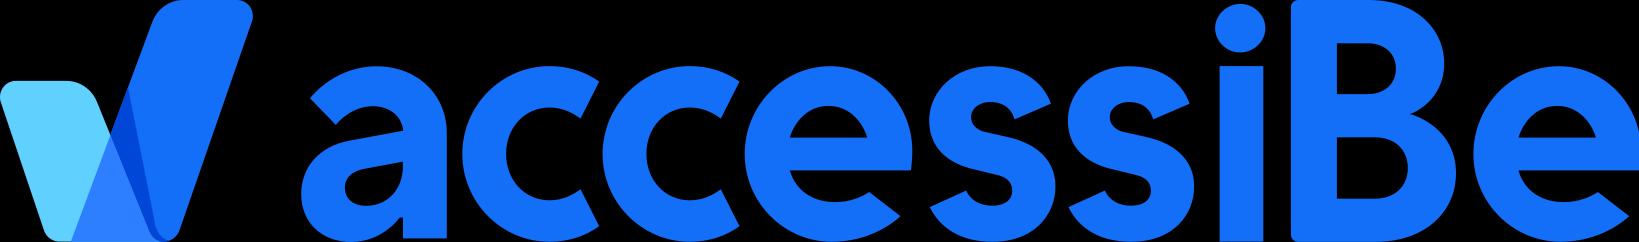 accessiBe_logo